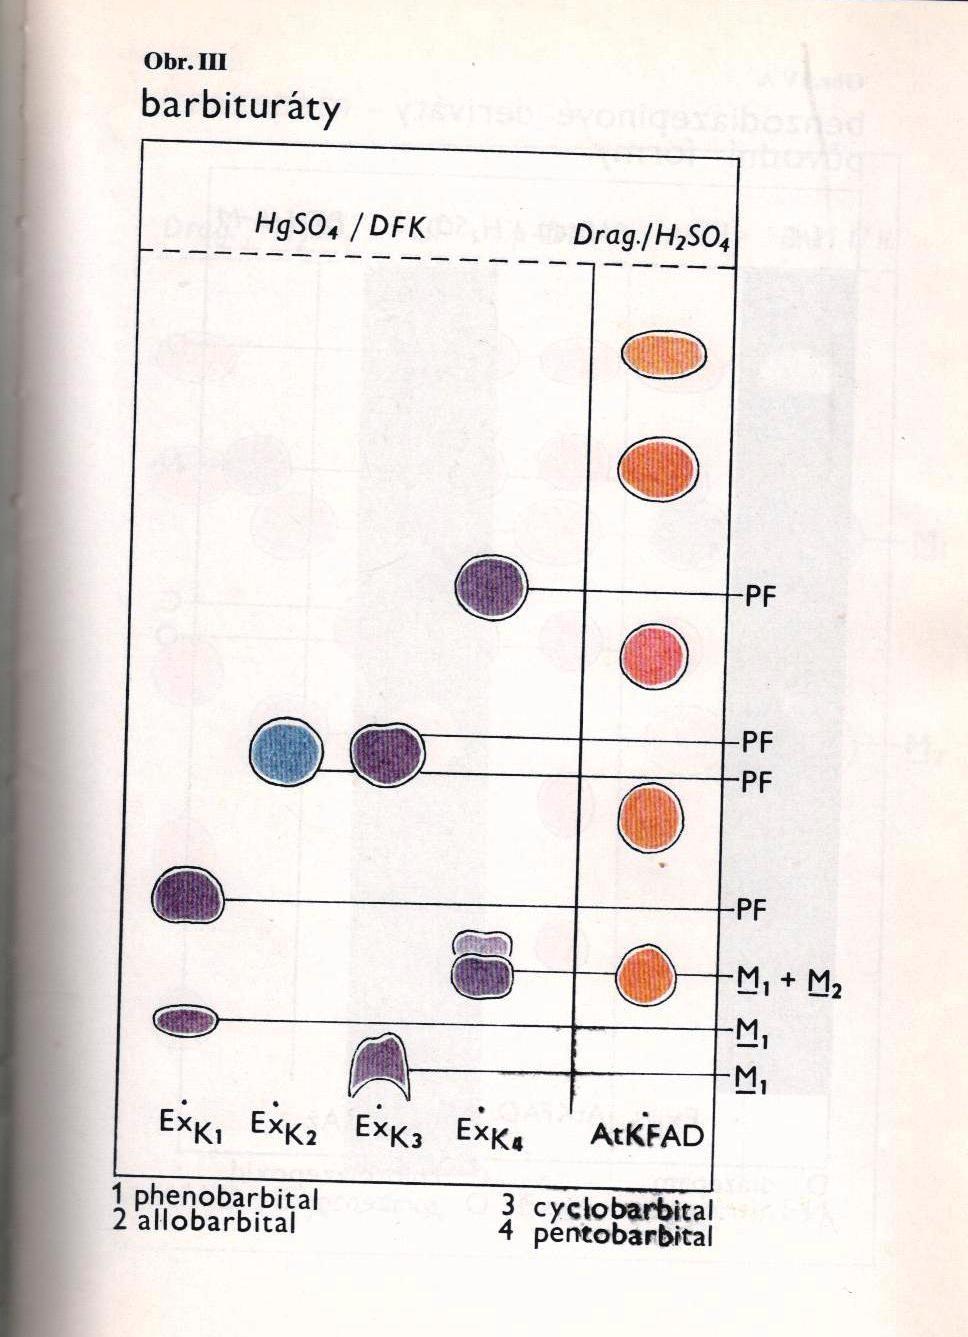 Tenkovrstevná chromatografie (TLC) Mateia Pharmaceutika 5, 1986 Ex K extrakt moče z kyselého prostředí AtKFAD standard (atropin, kodein, phenmetrazin, aminophenazon, diazepam) HgSO 4 / DFK - HgSO 4 s